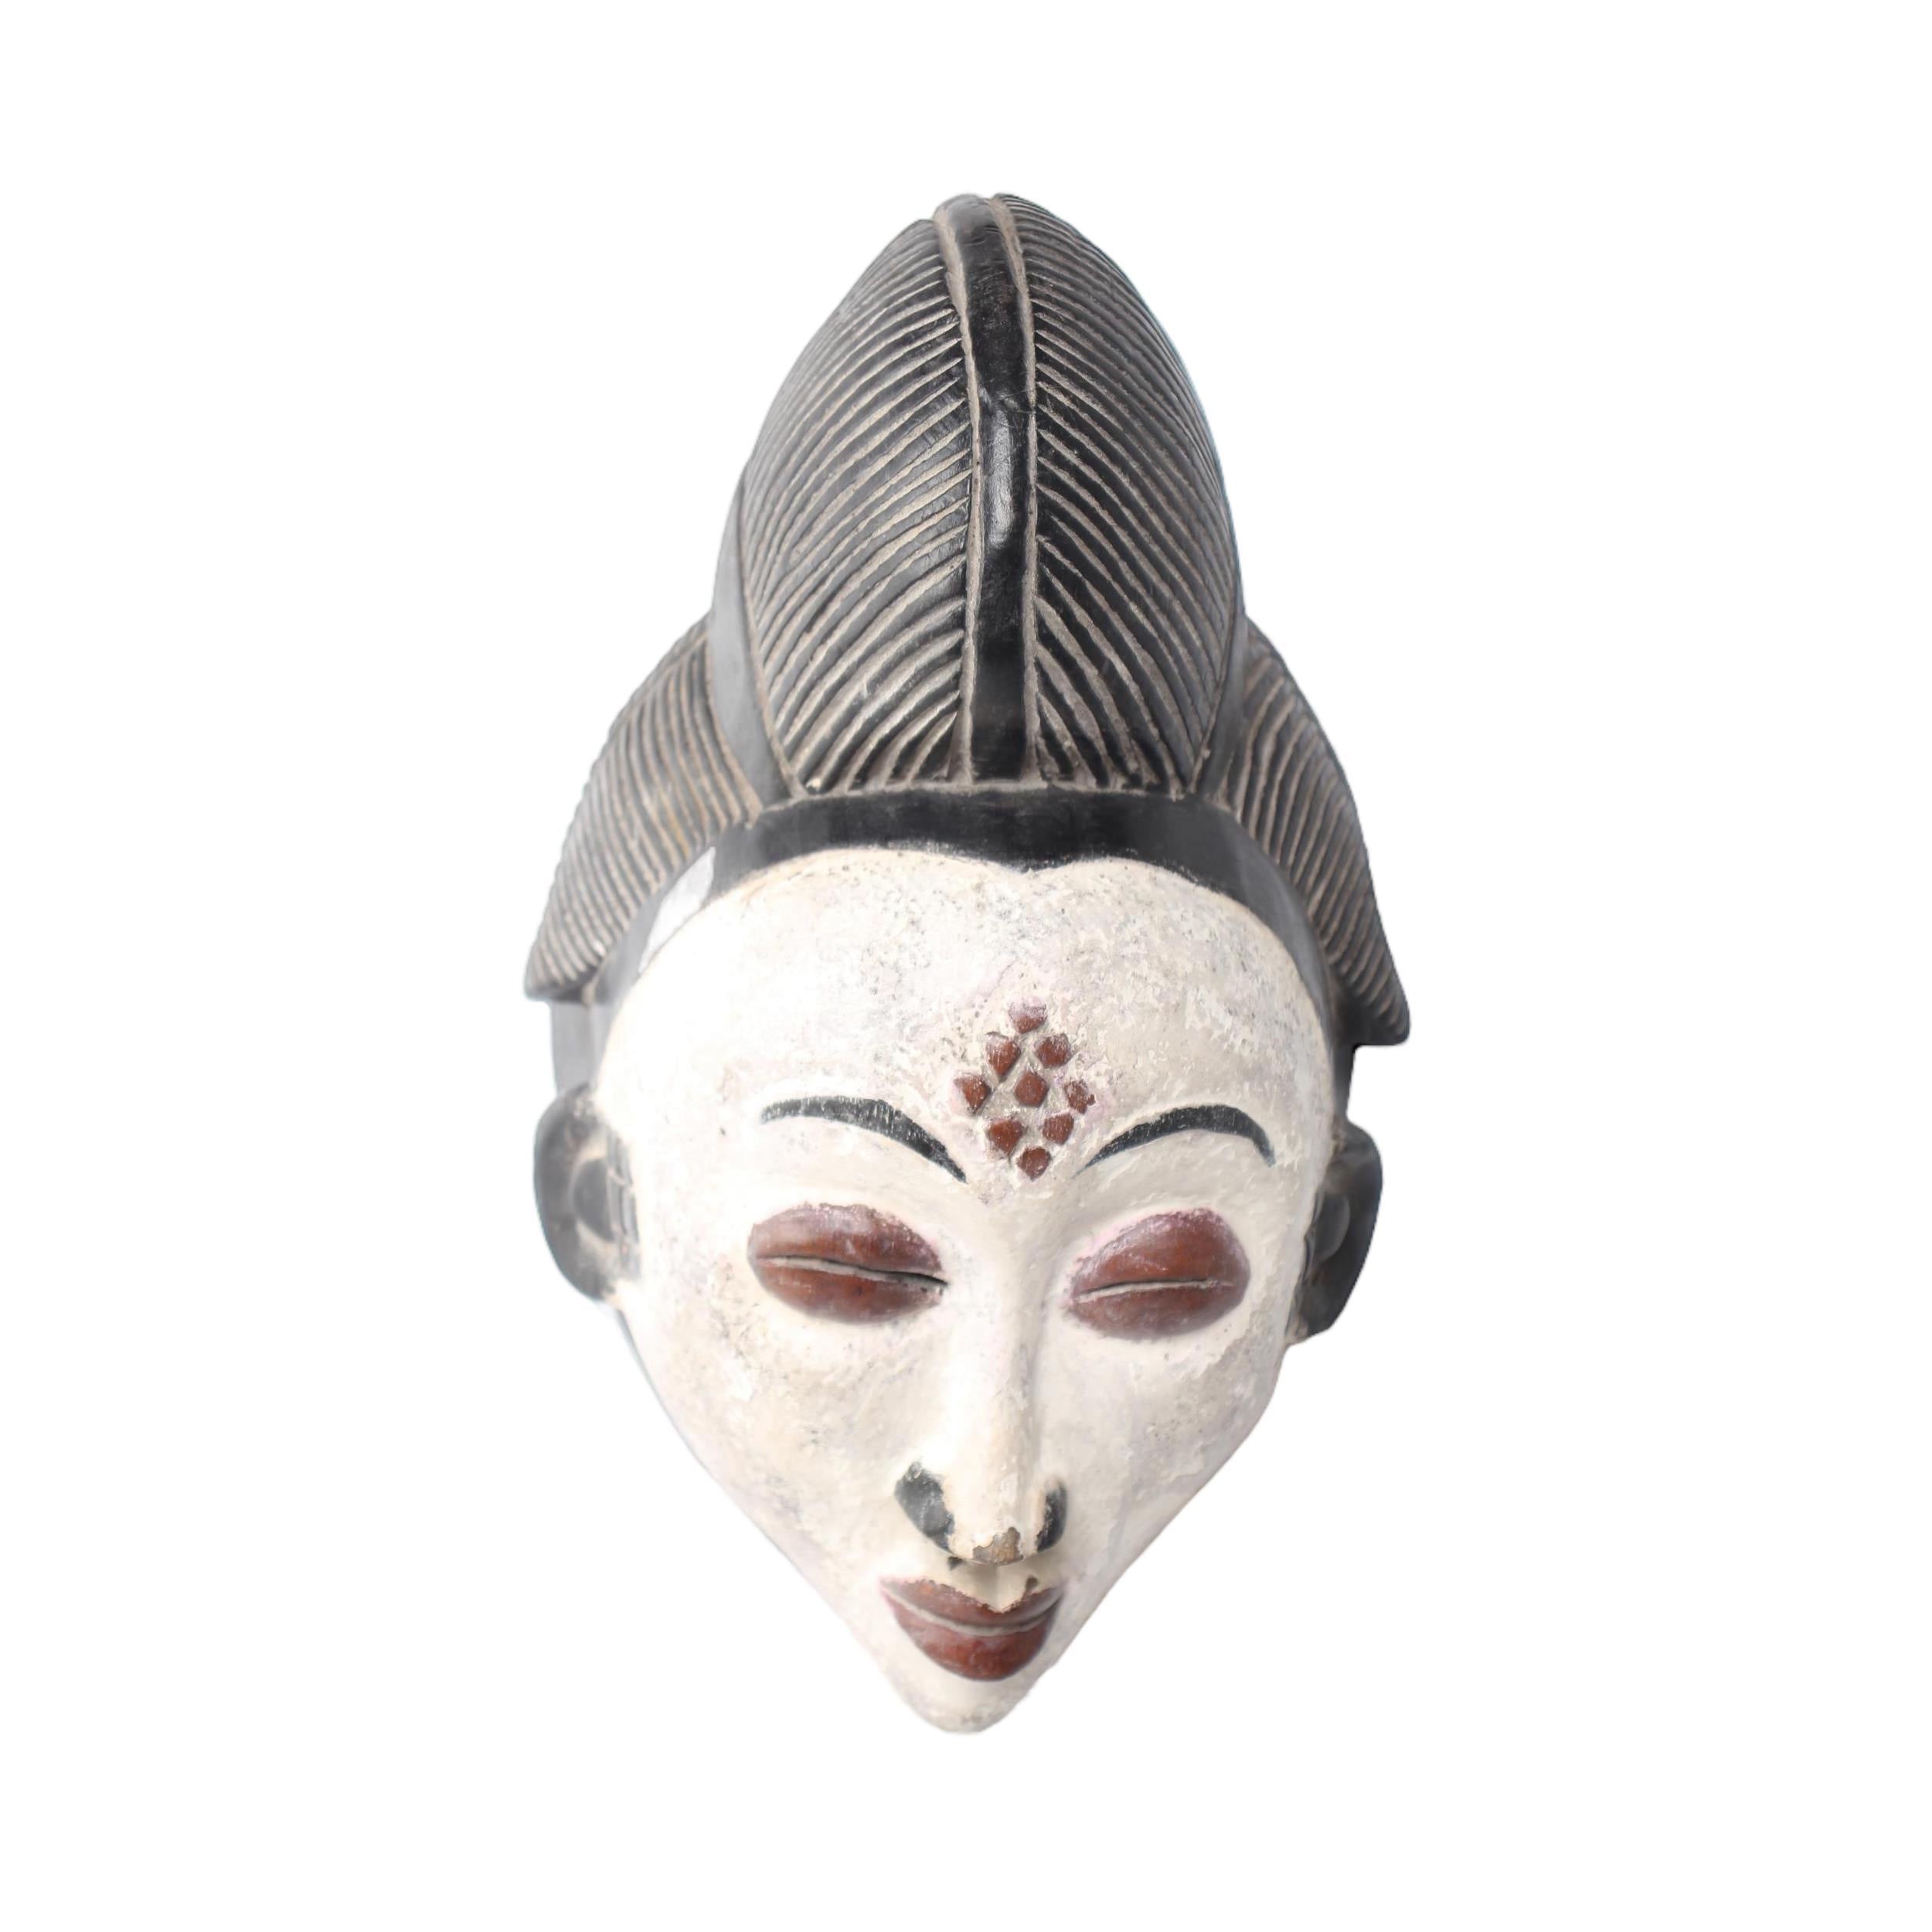 Punu Tribe Mask ~14.6" Tall